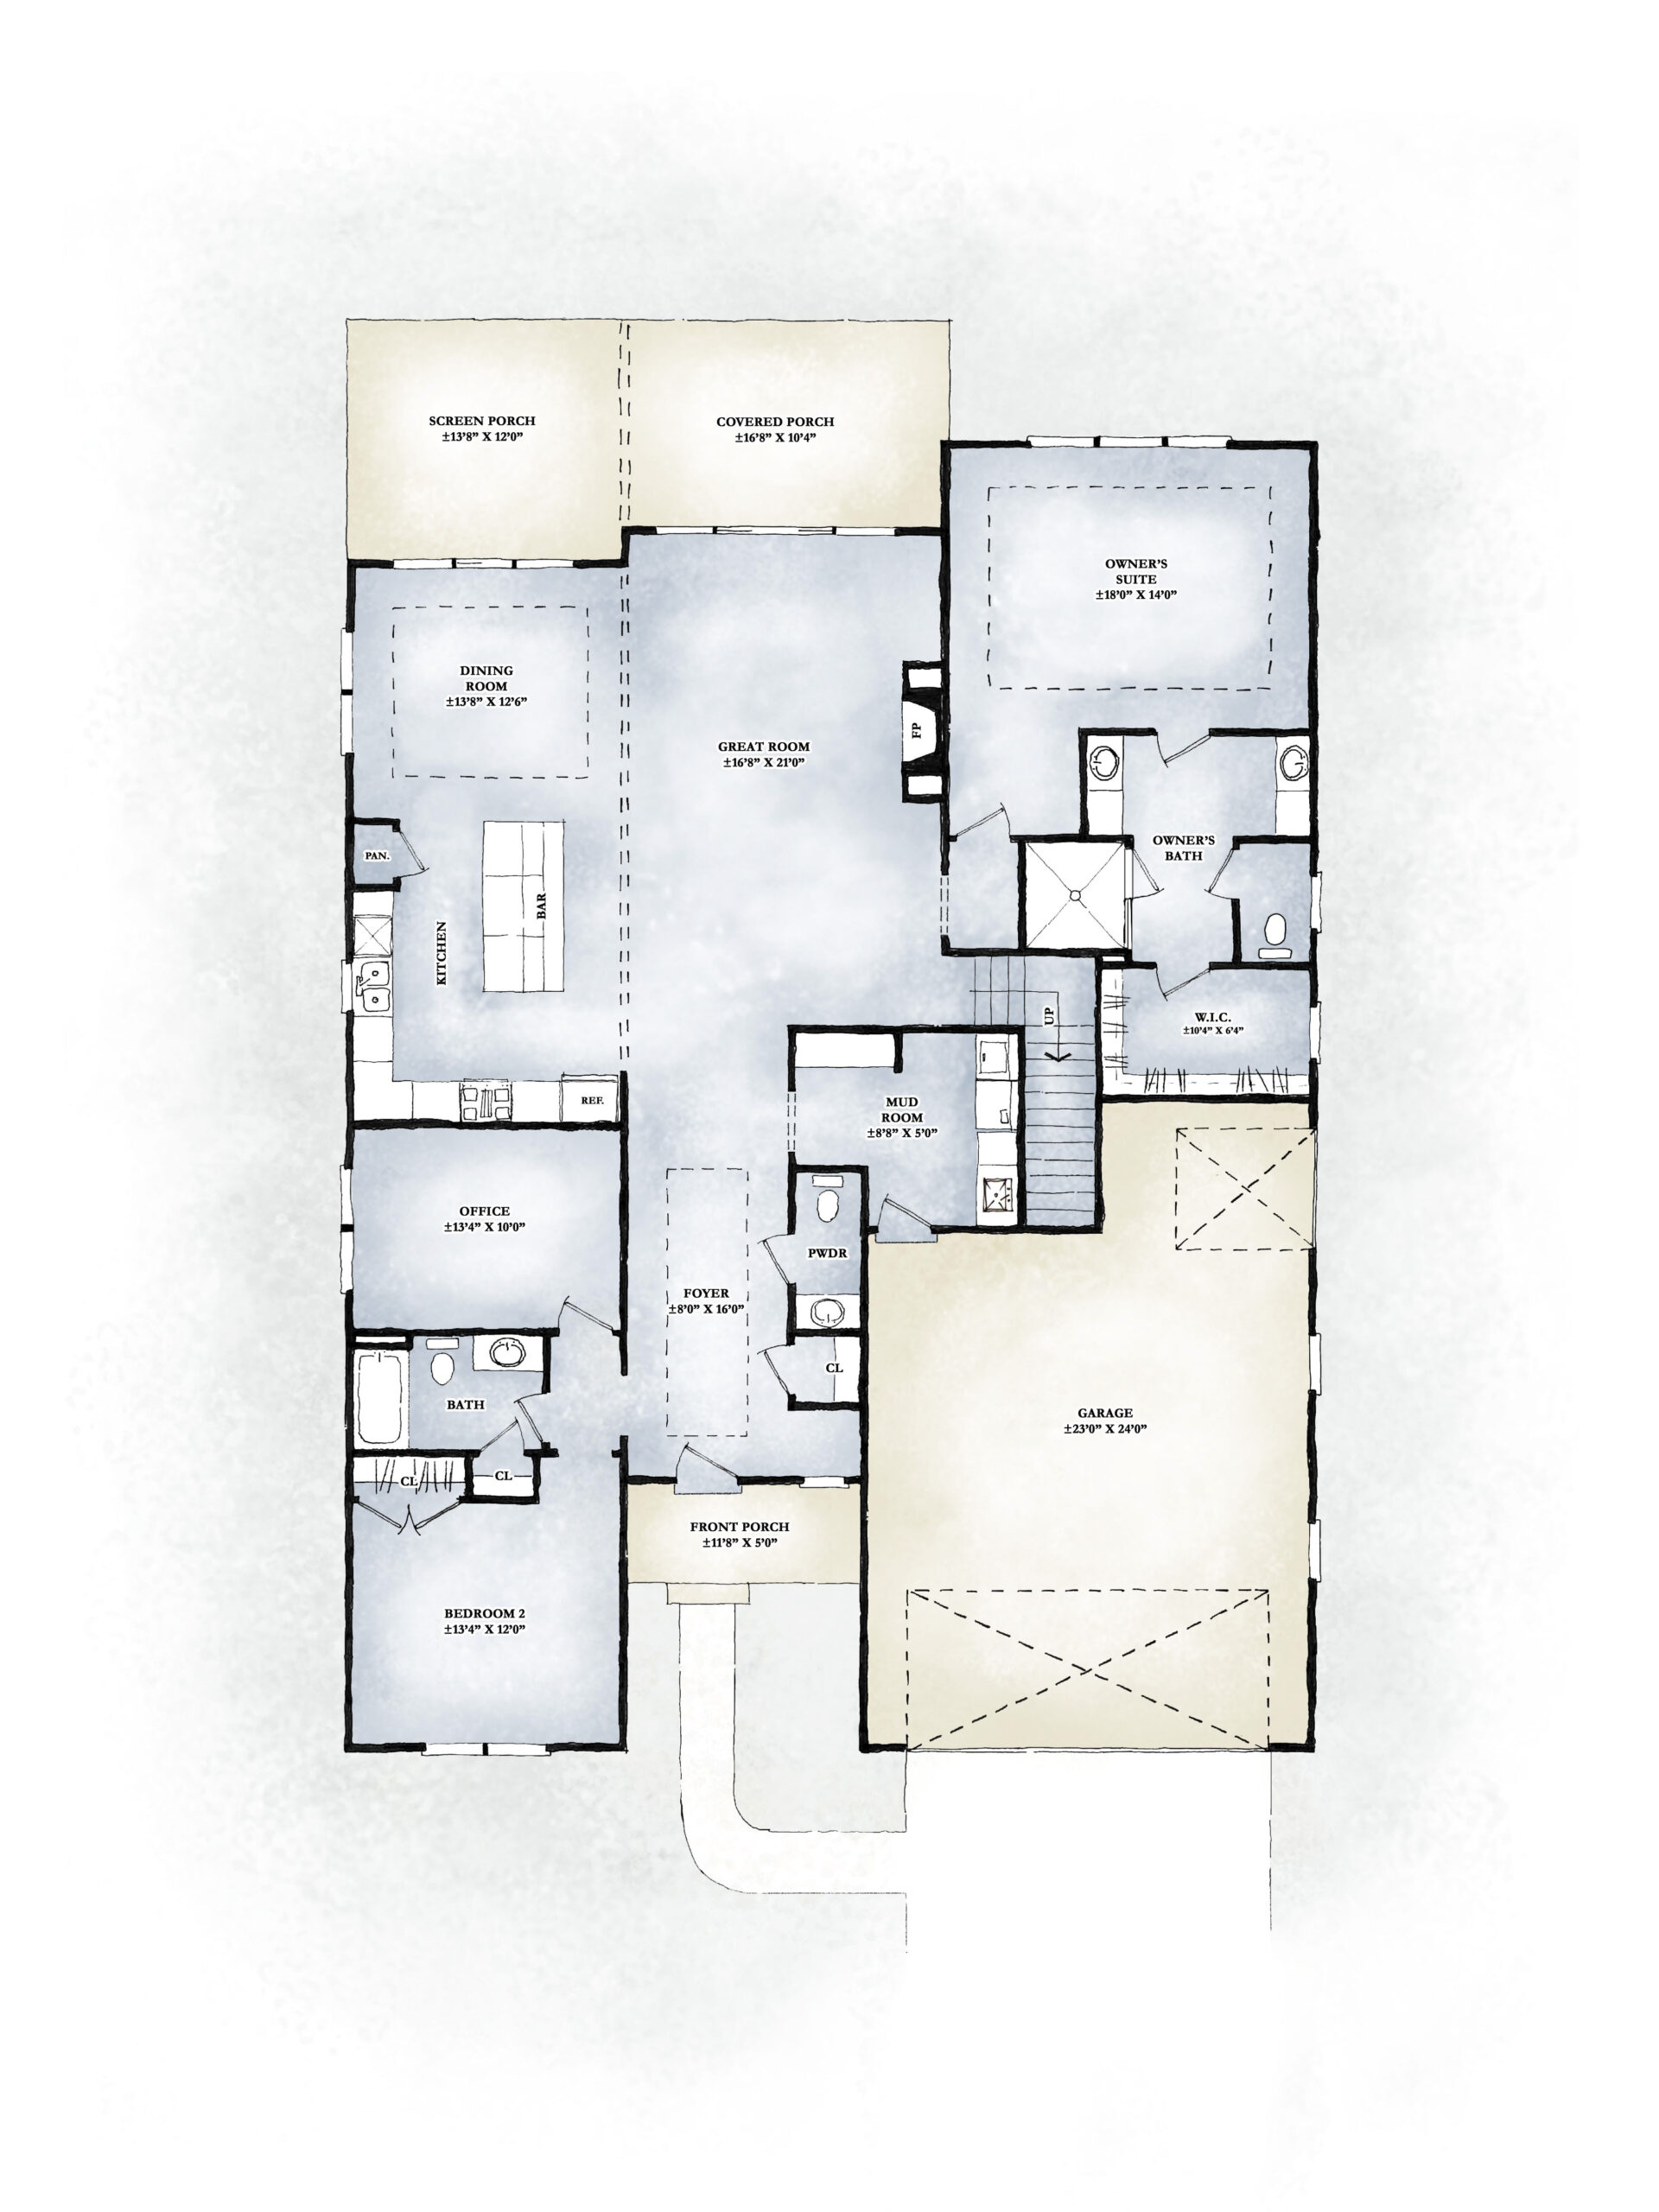 Lot 134 main level floorplan